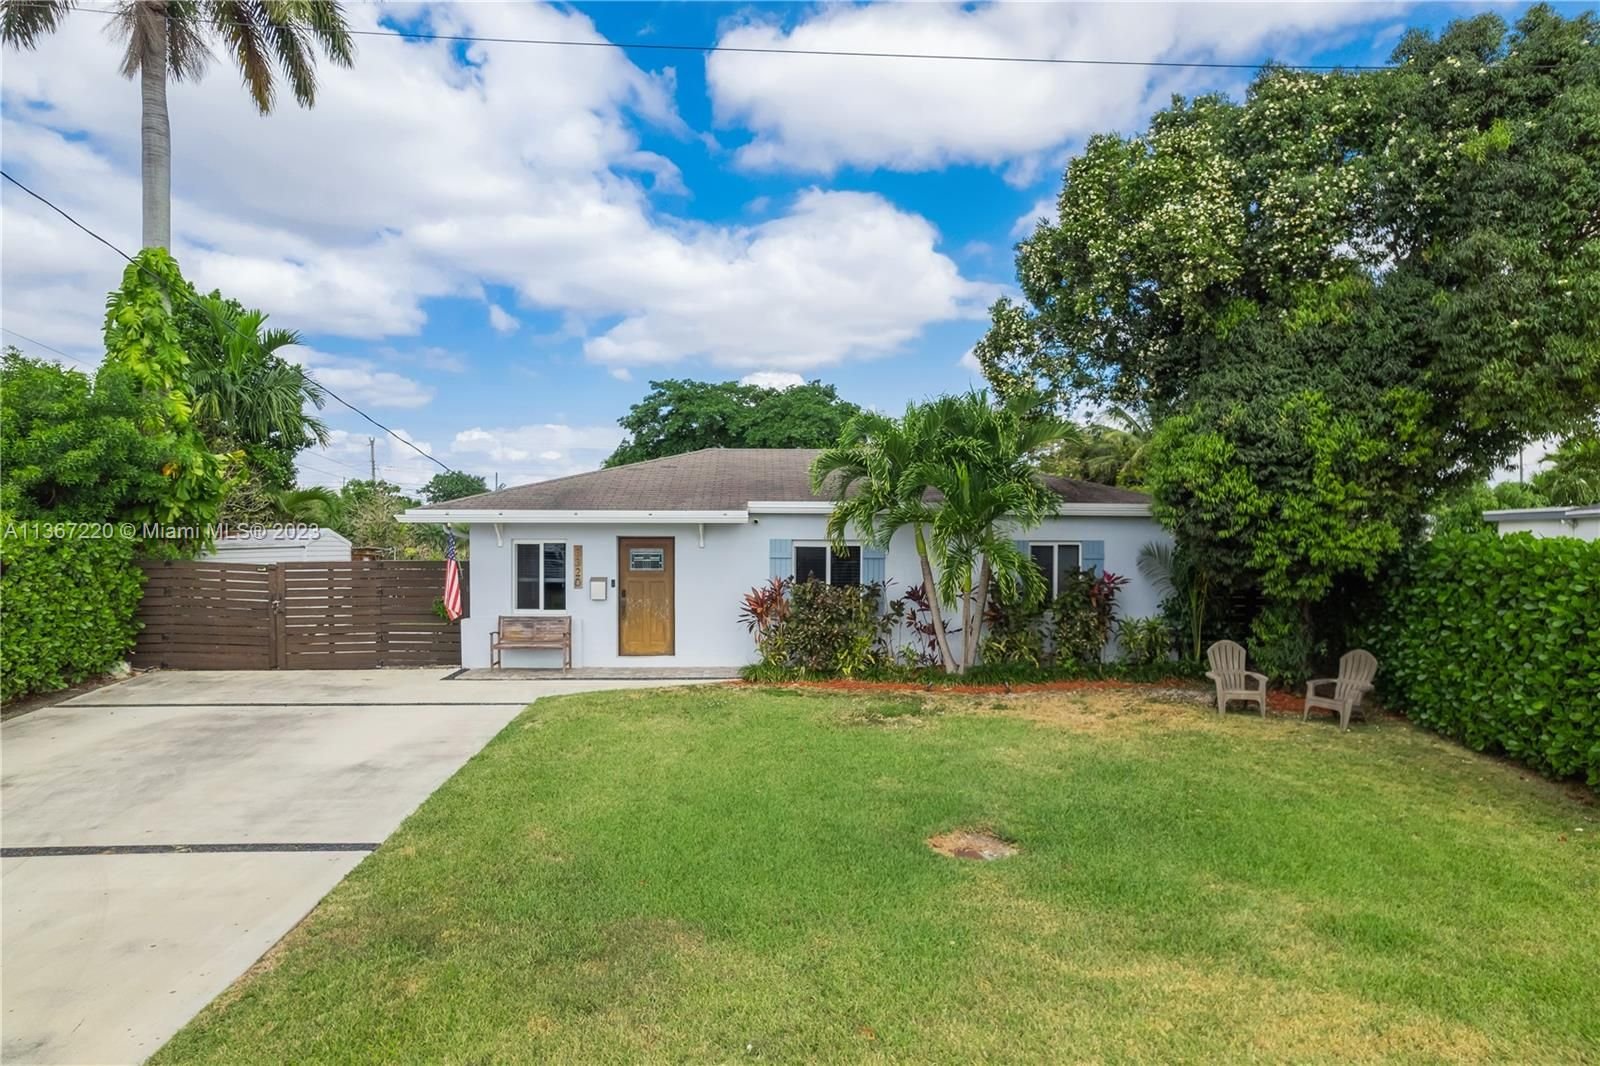 Real estate property located at 3320 75th Ave, Miami-Dade County, Miami, FL